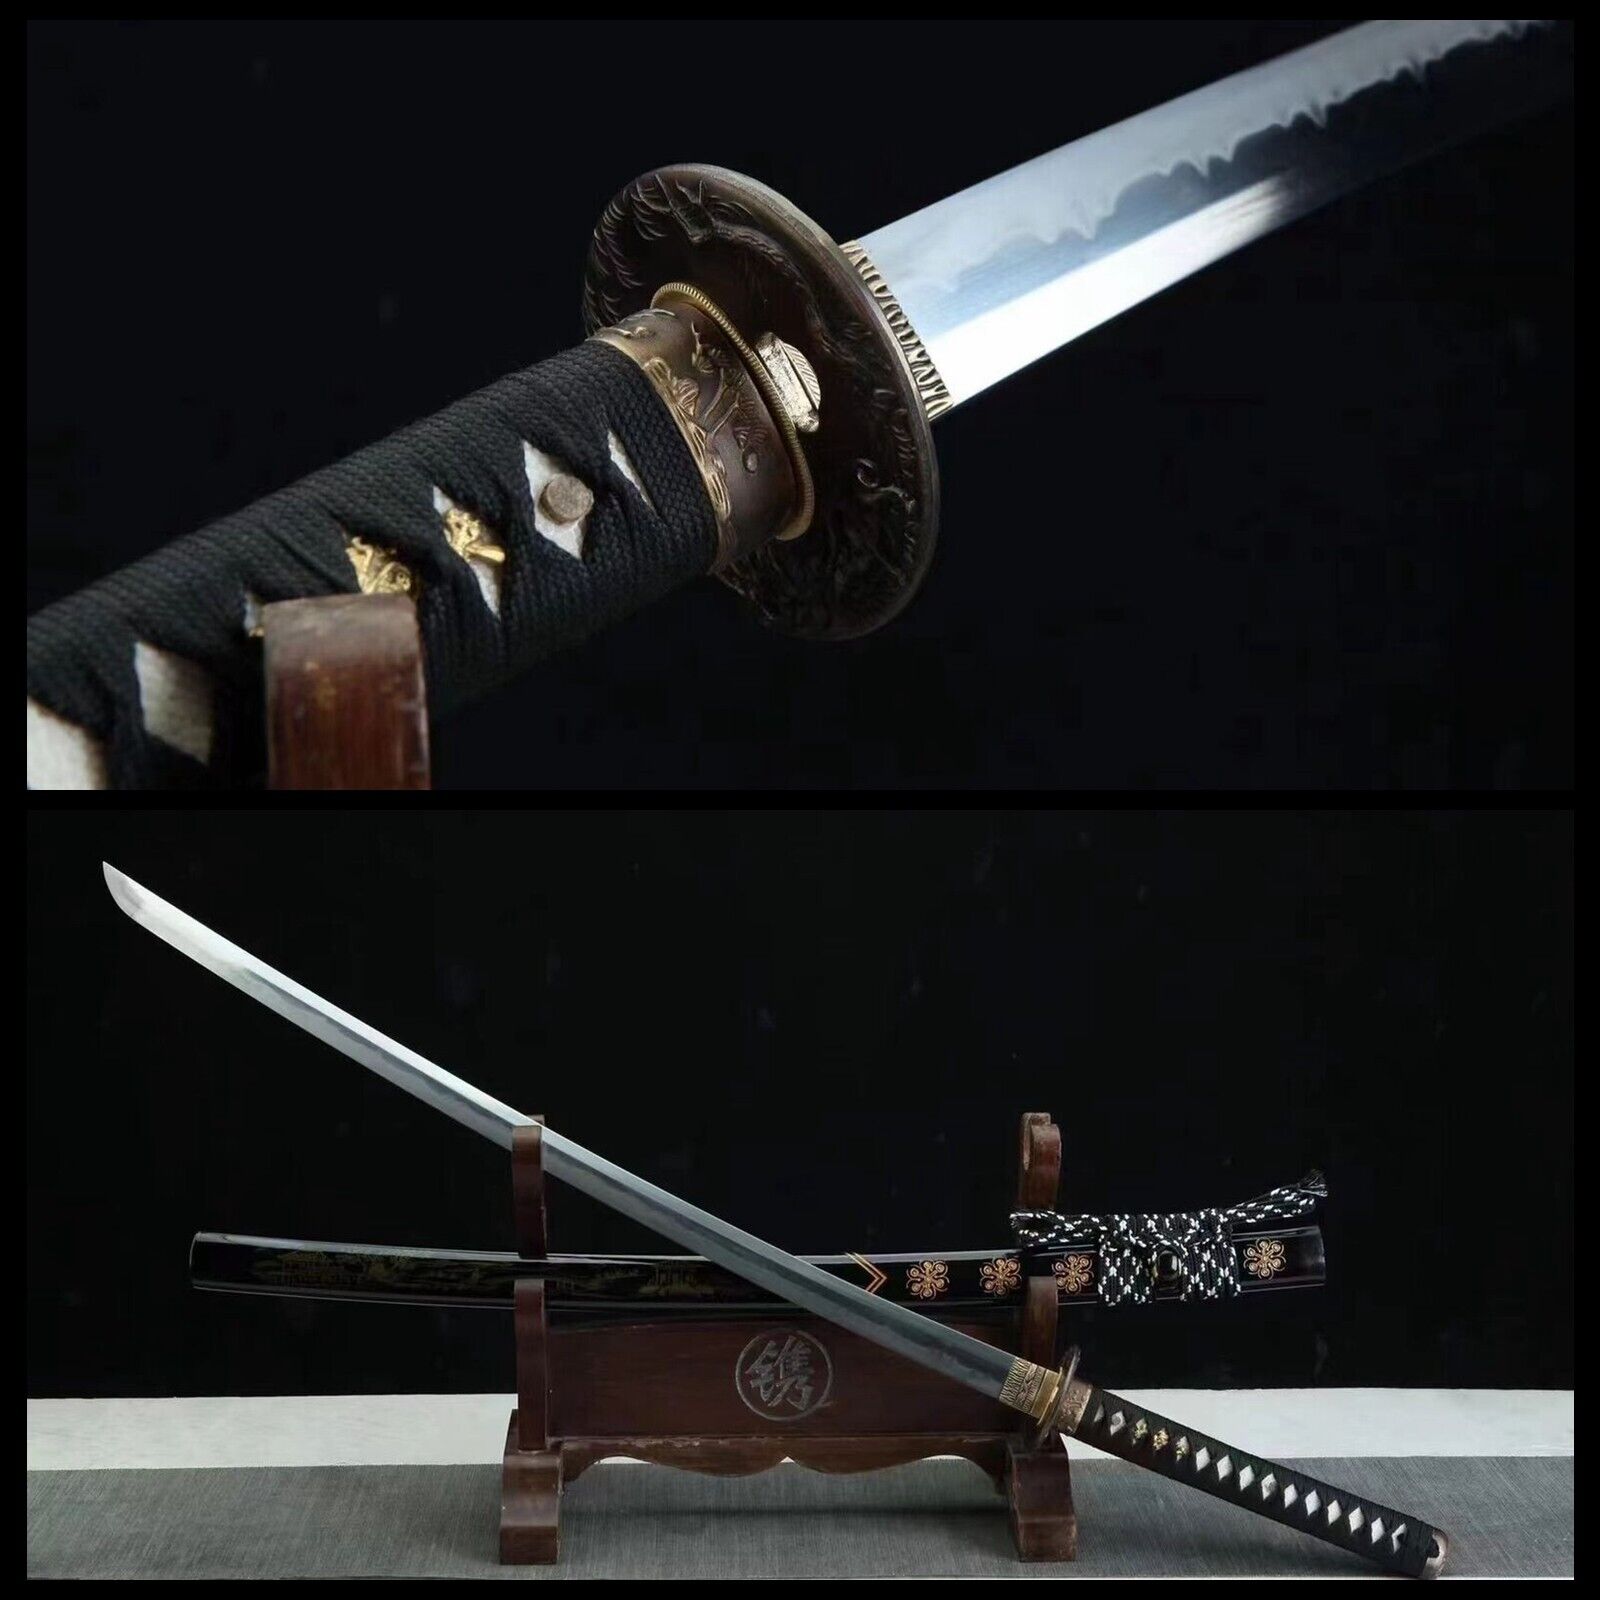 Clay Tempered T10 Steel Choji Hamon Japanese Samurai Sword Katana Razor Sharp